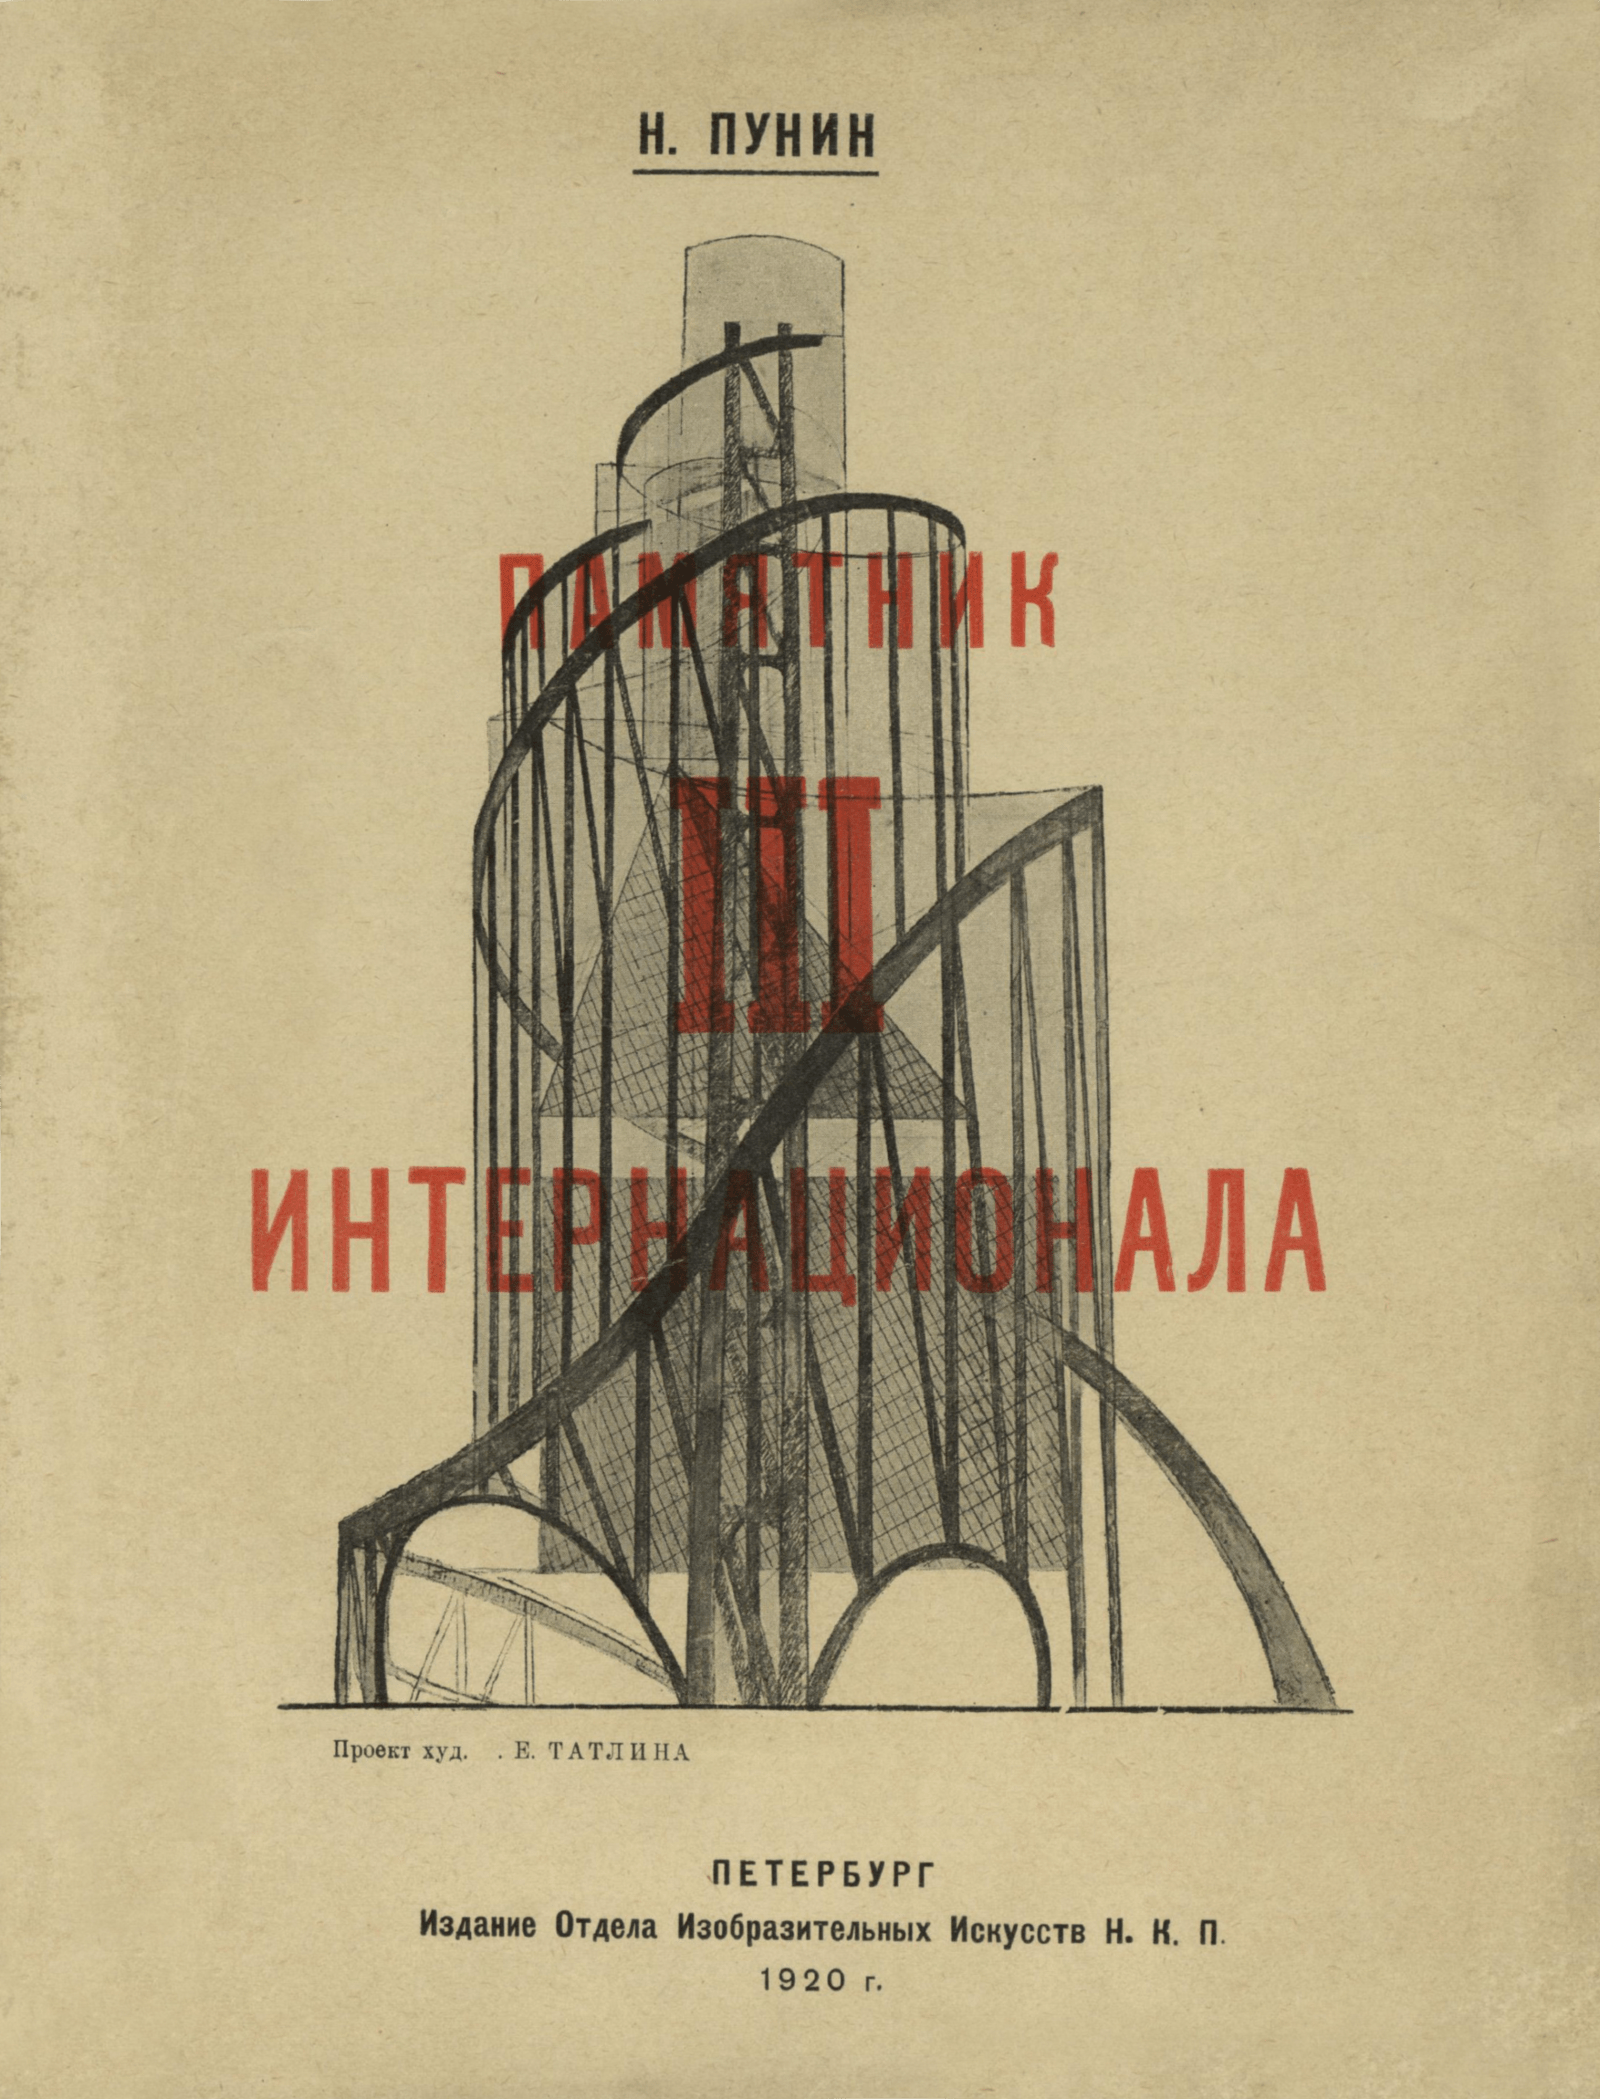 Н. Пунин. Брошюра «Памятник III Интернационала», 1920